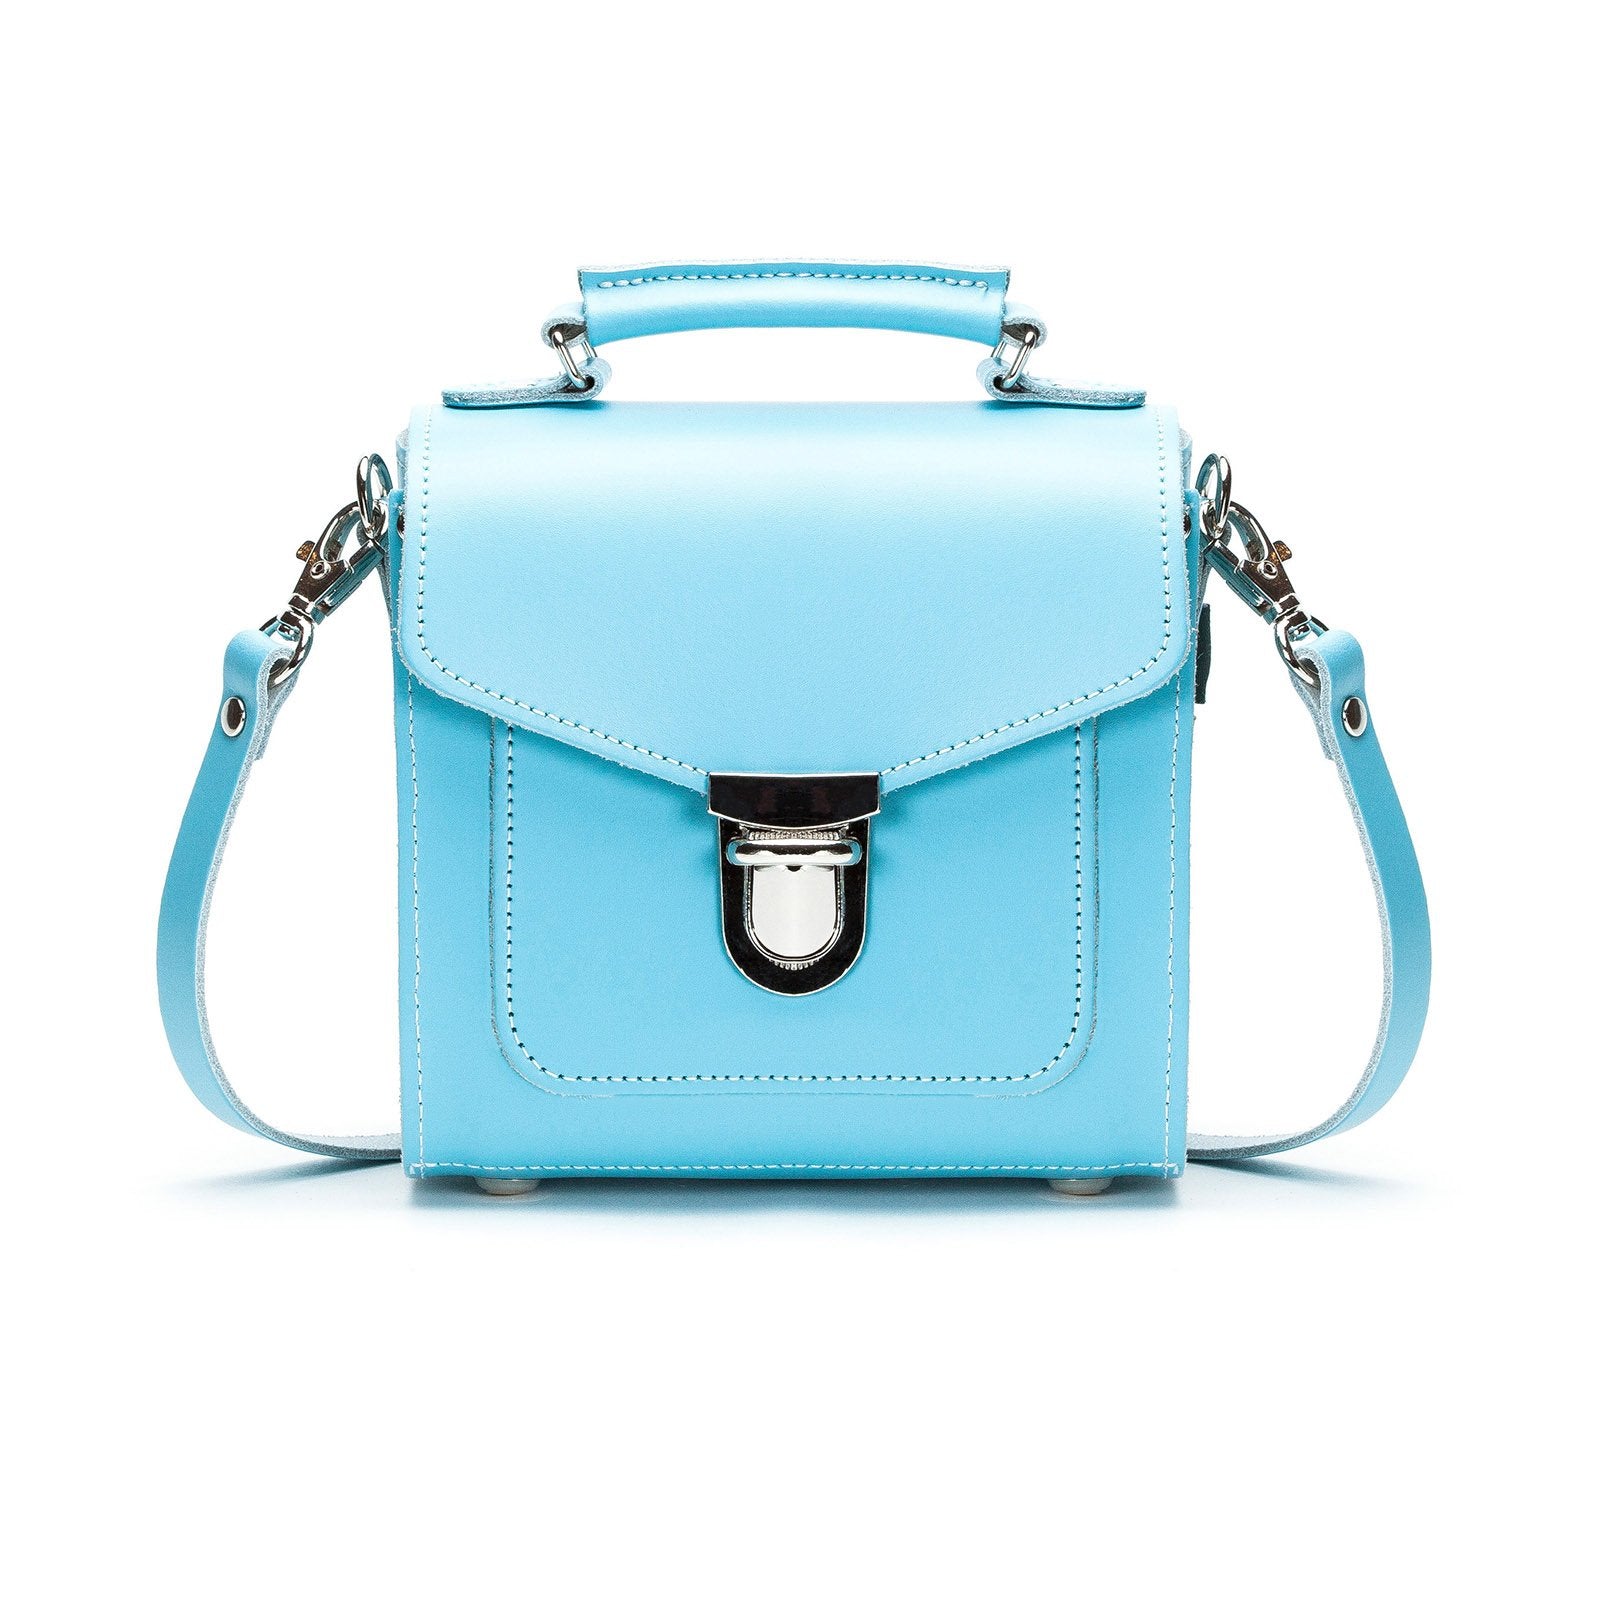 Handmade Leather Sugarcube Handbag - Pastel Baby Blue - Small